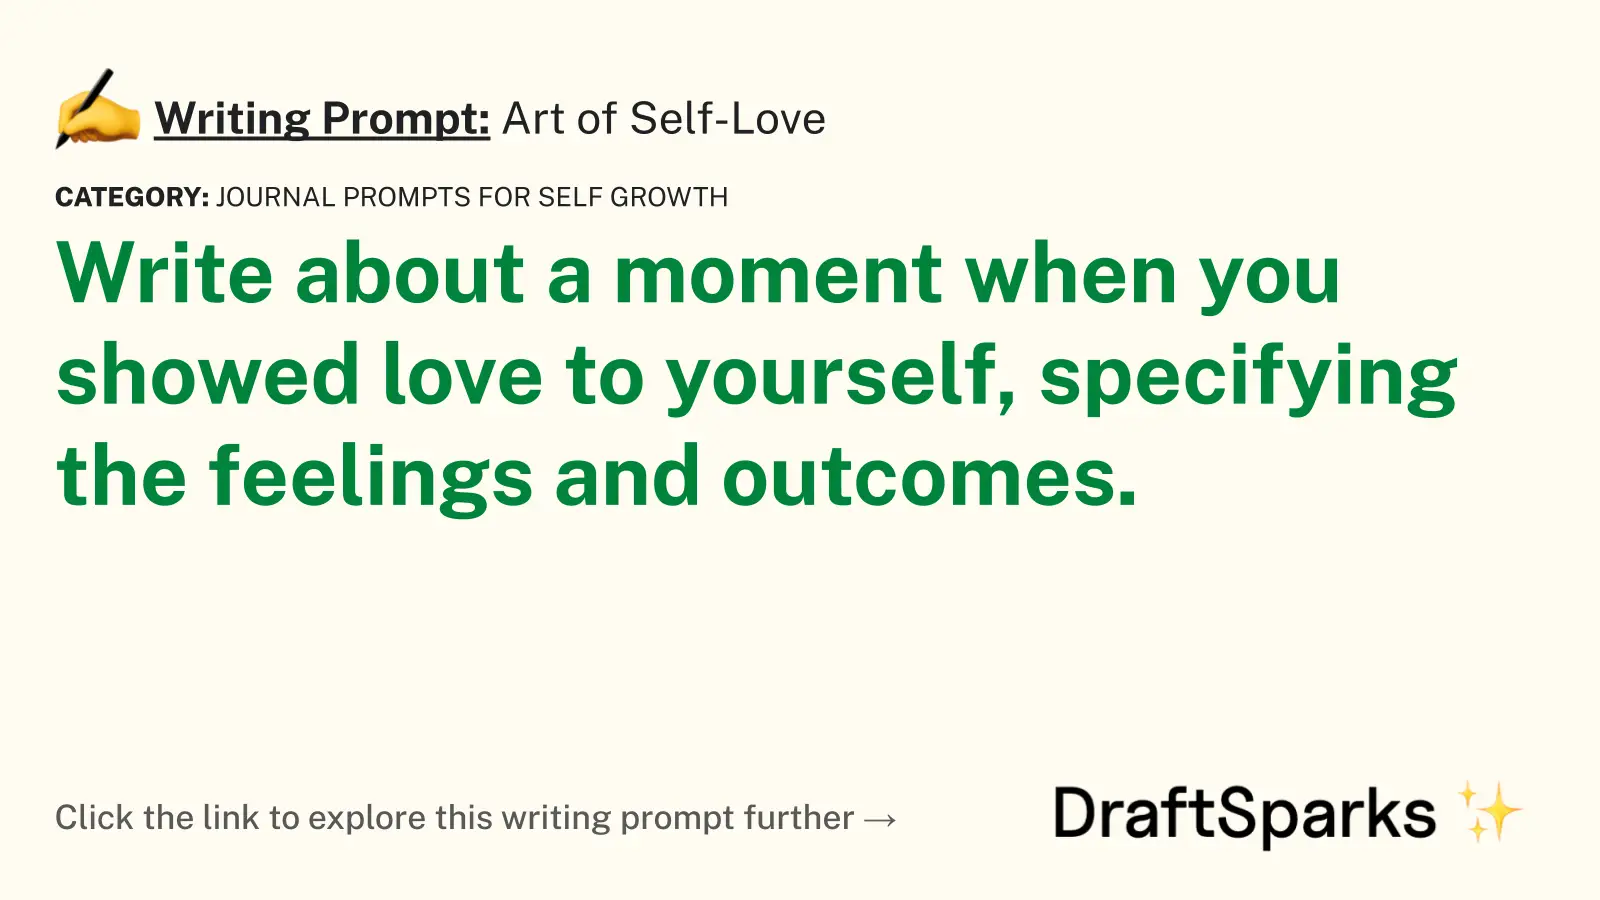 Art of Self-Love